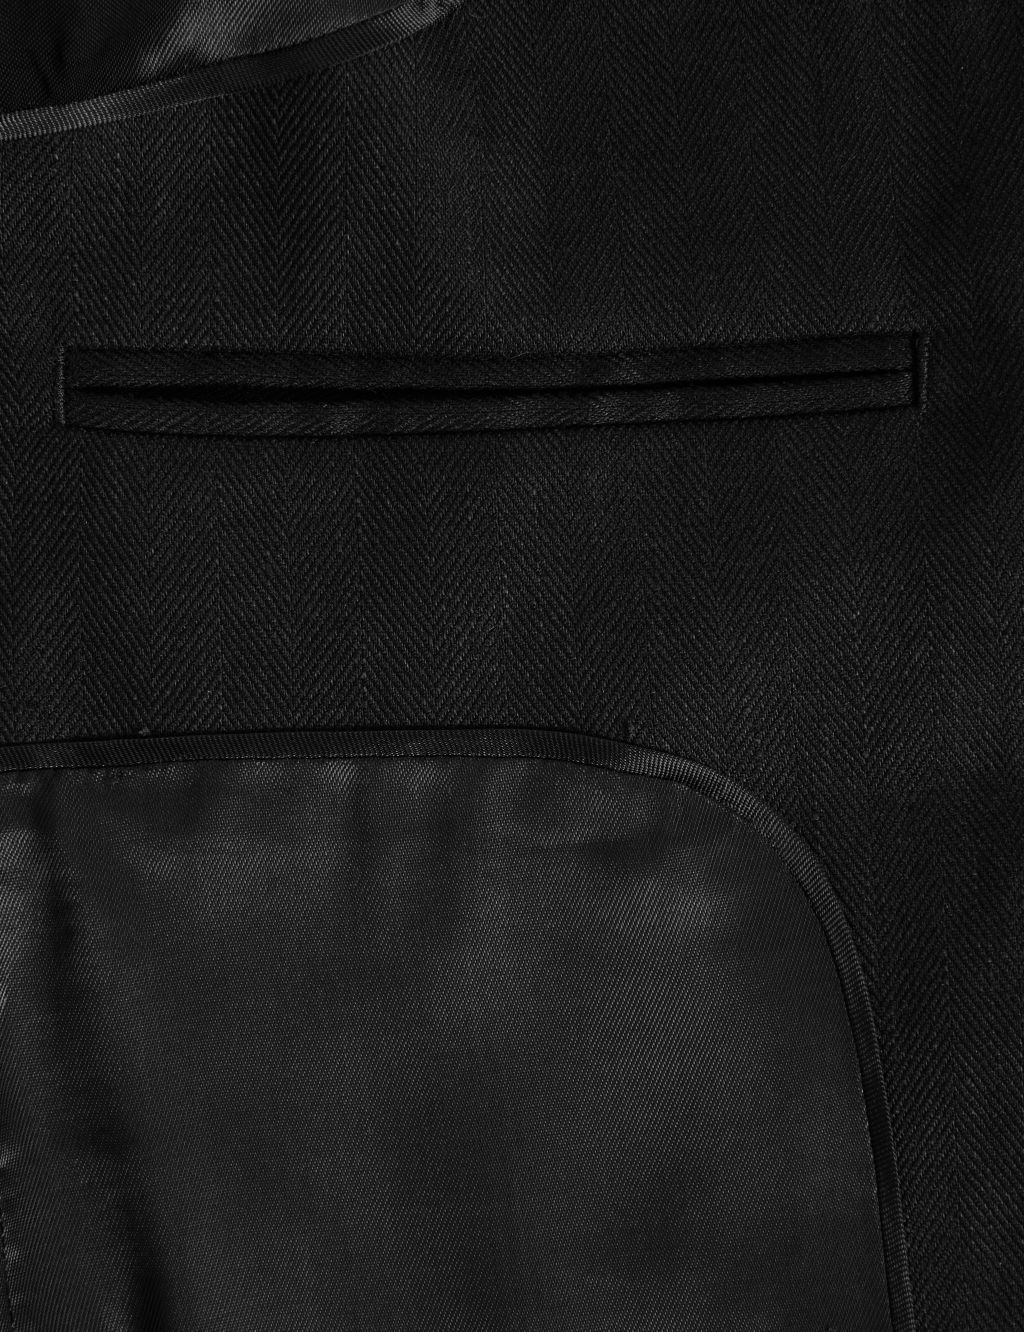 Linen Blend Herringbone Utility Jacket image 10